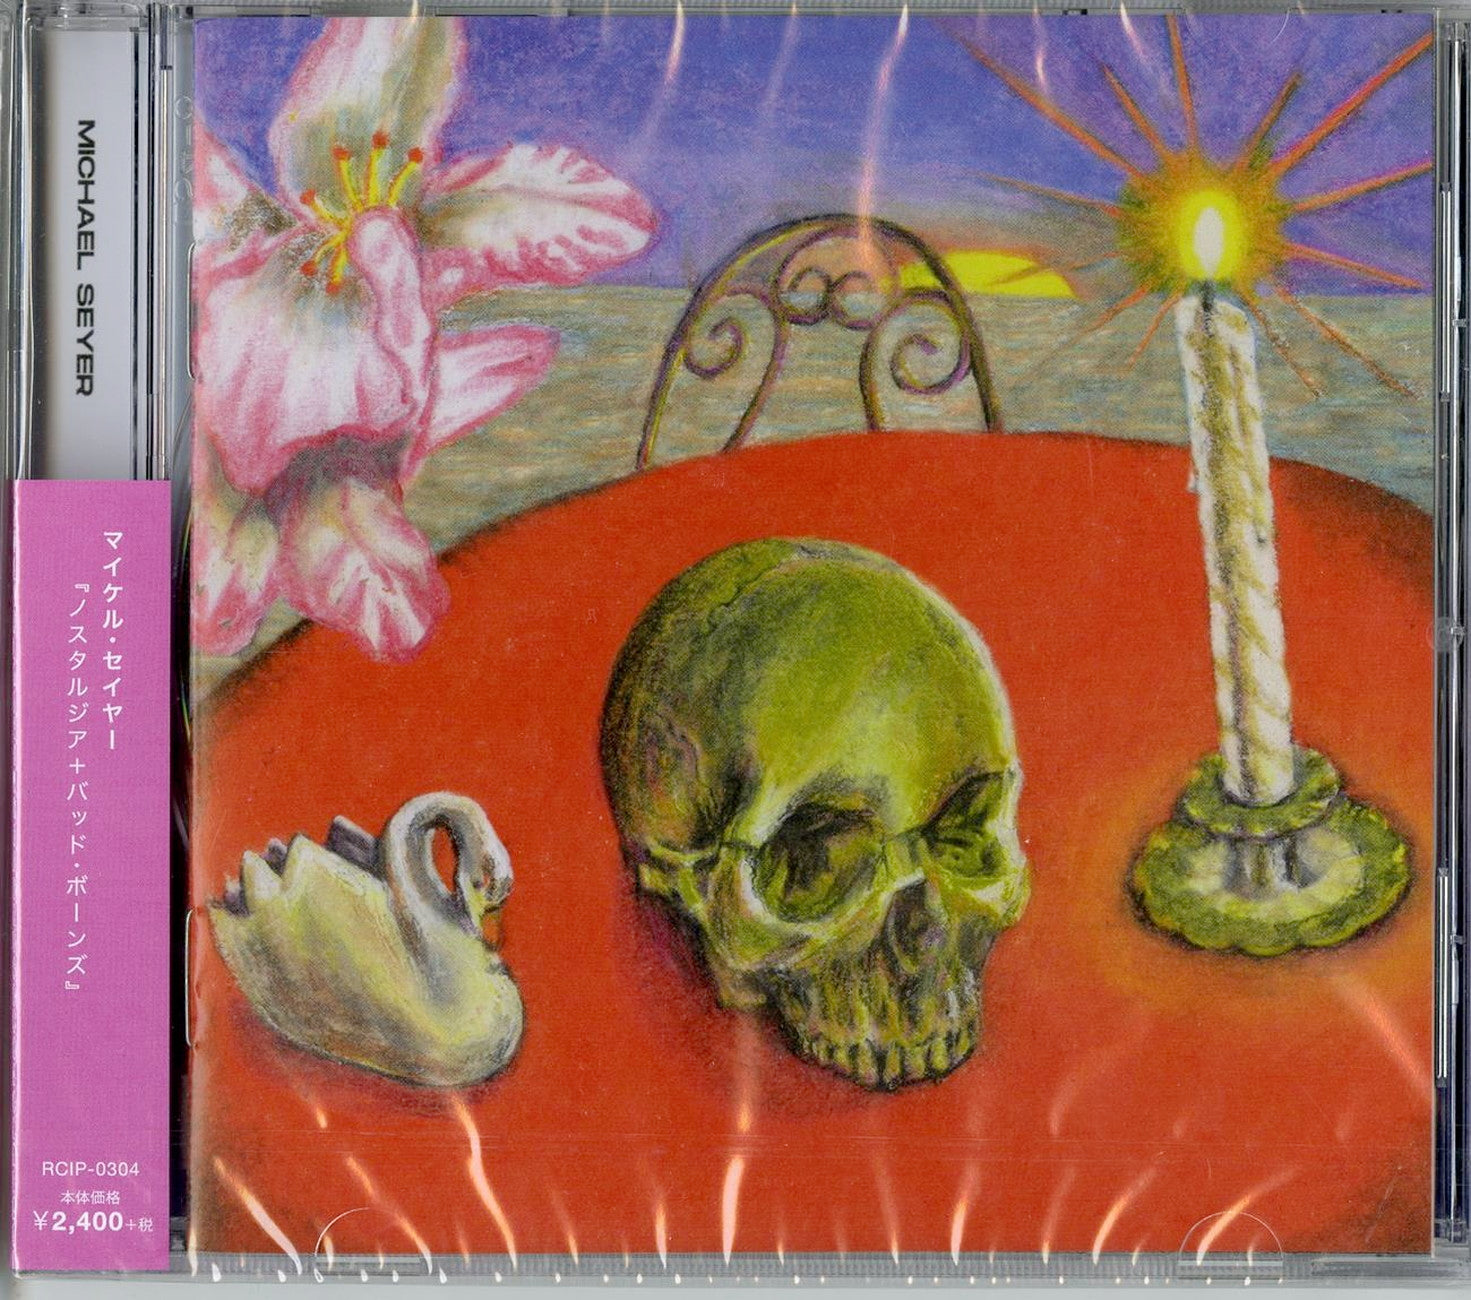 Michael Seyer   Nostalgia + Bad Bonez   Japan CD – CDs Vinyl Japan